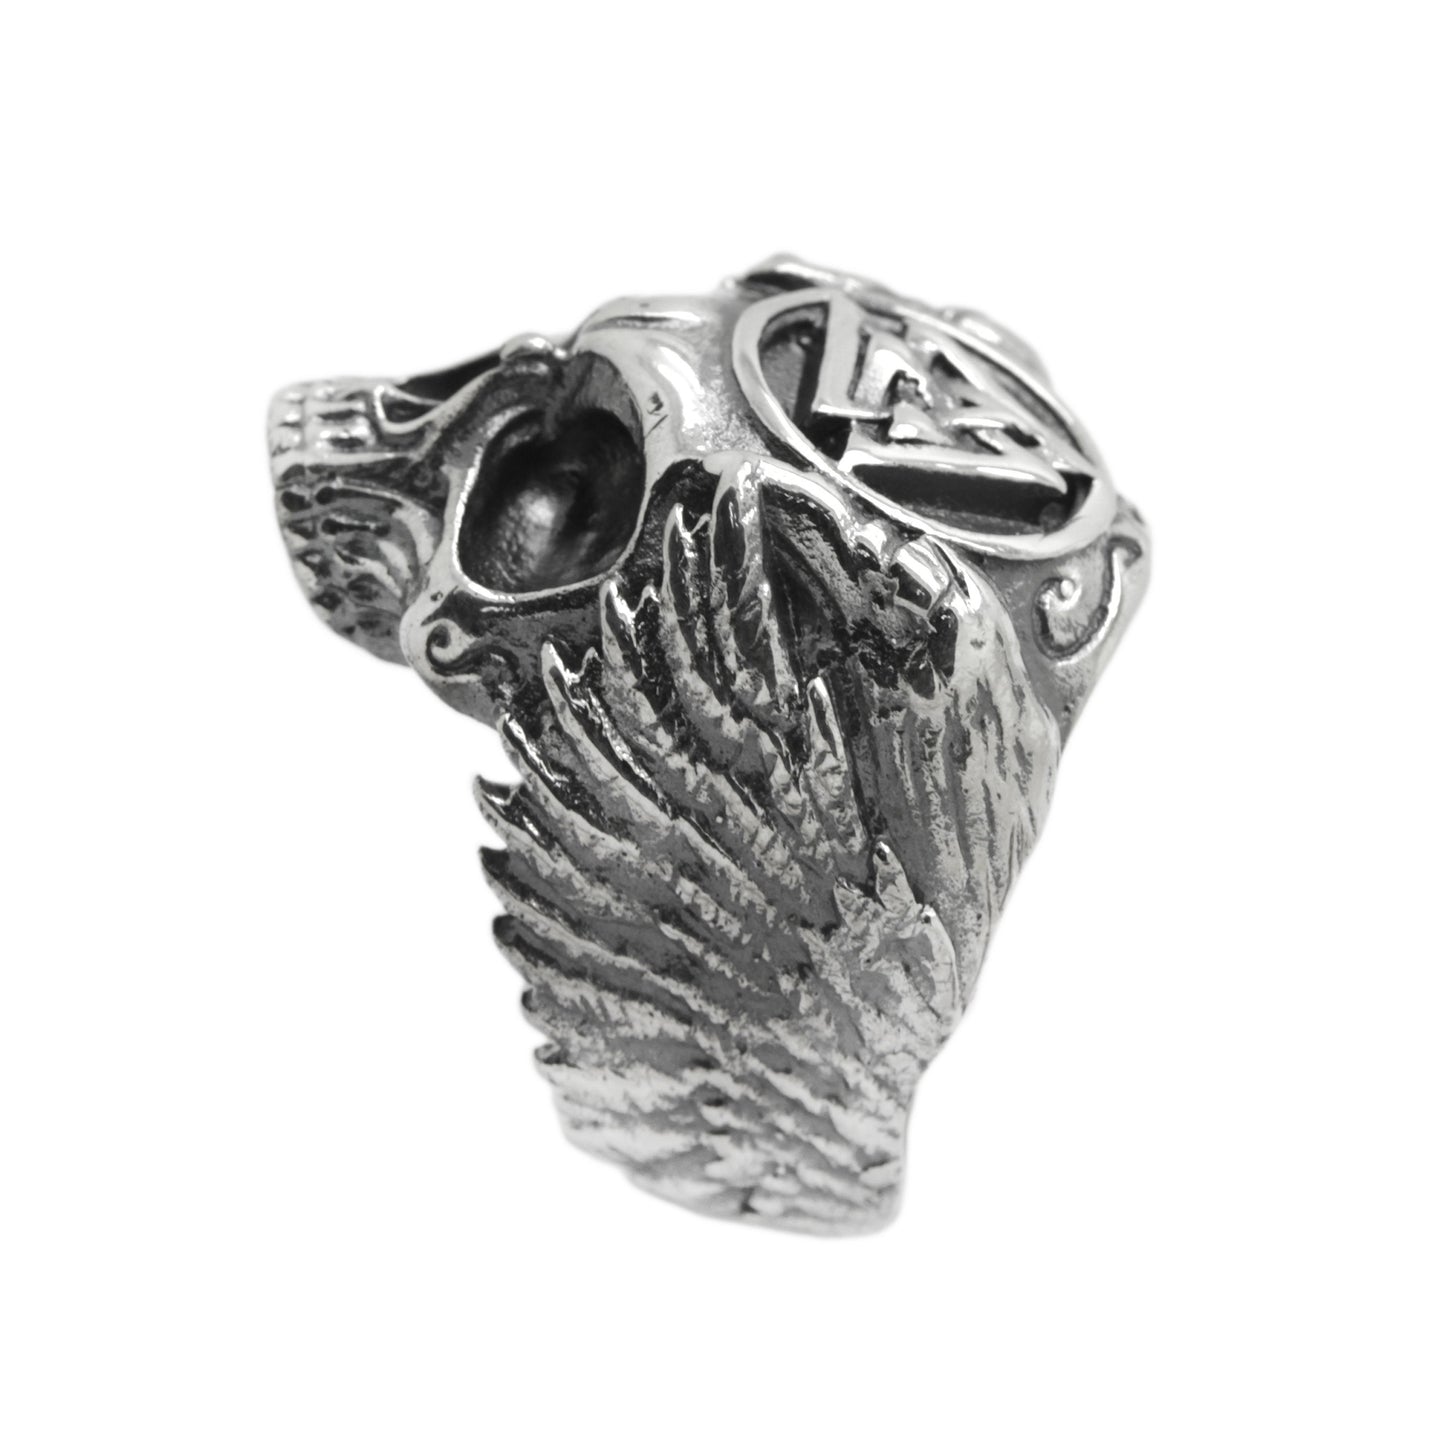 Valknut with Ravens Skull, Viking Odin Ring, Mens Sterling Silver Ring